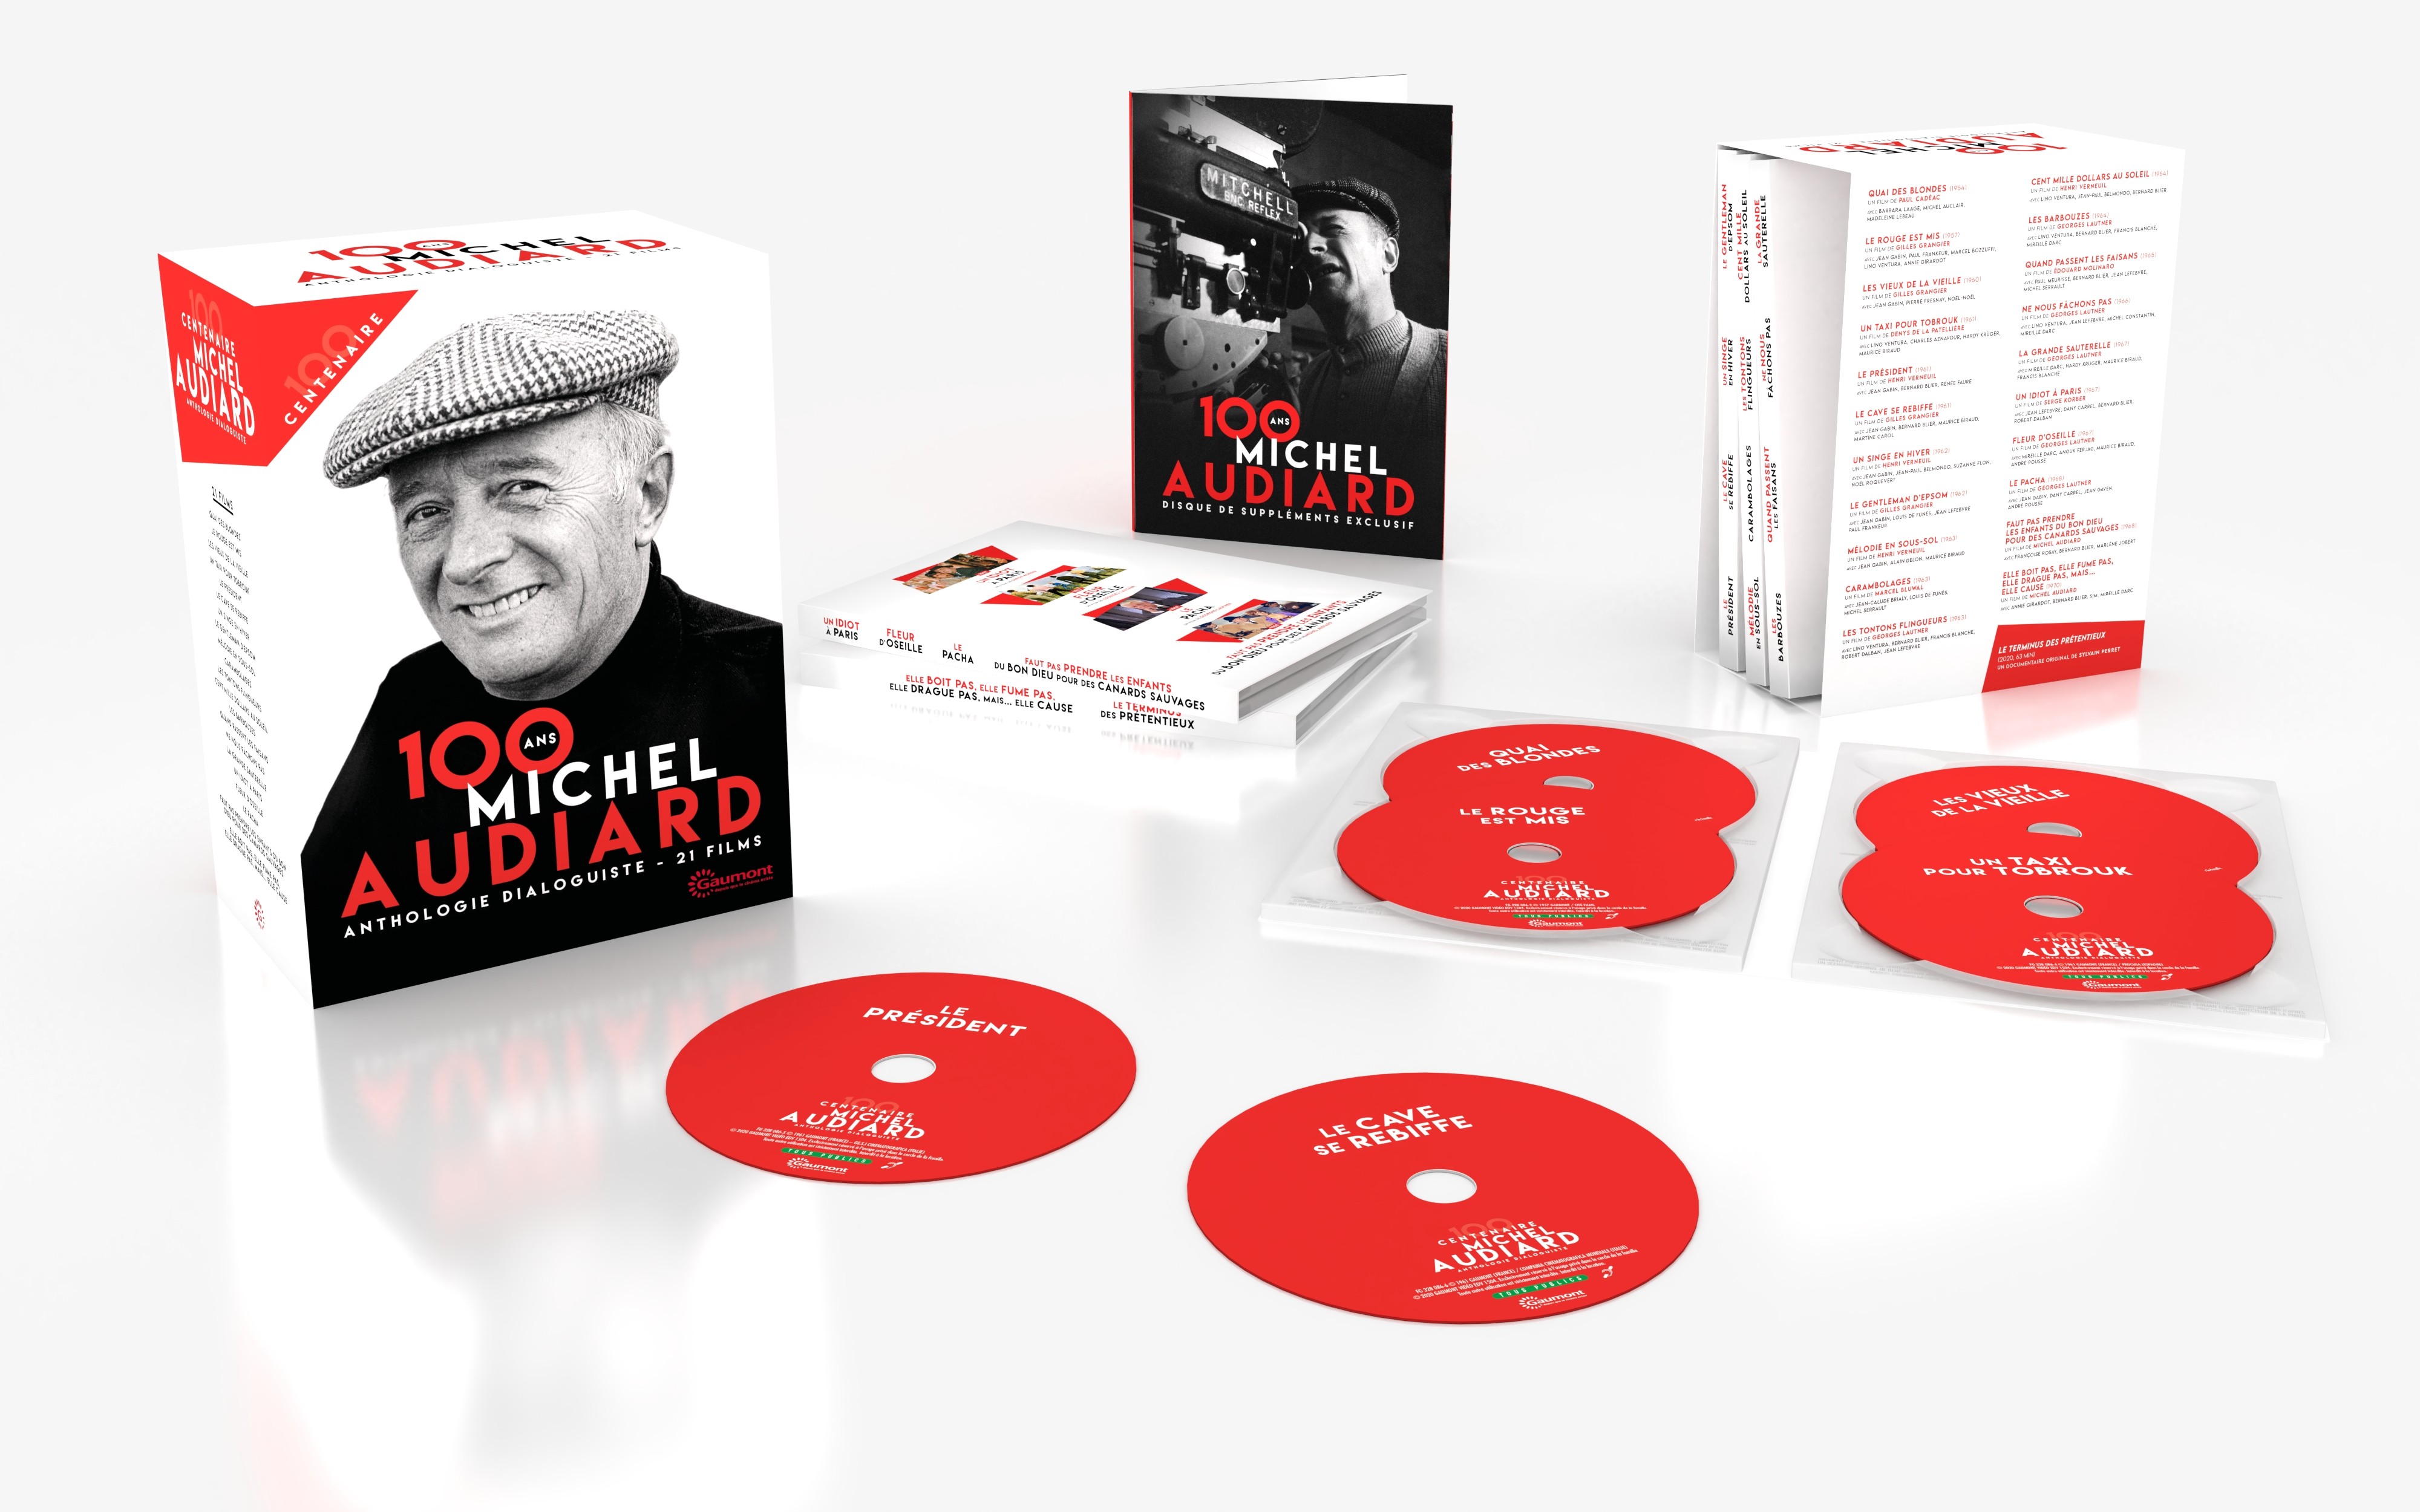 COFFRET CENTENAIRE MICHEL AUDIARD - ANTHOLOGIE DIALOGUISTE - EDITION LIMITEE NUMEROTEE - 21 DVD + 1 DVD BONUS